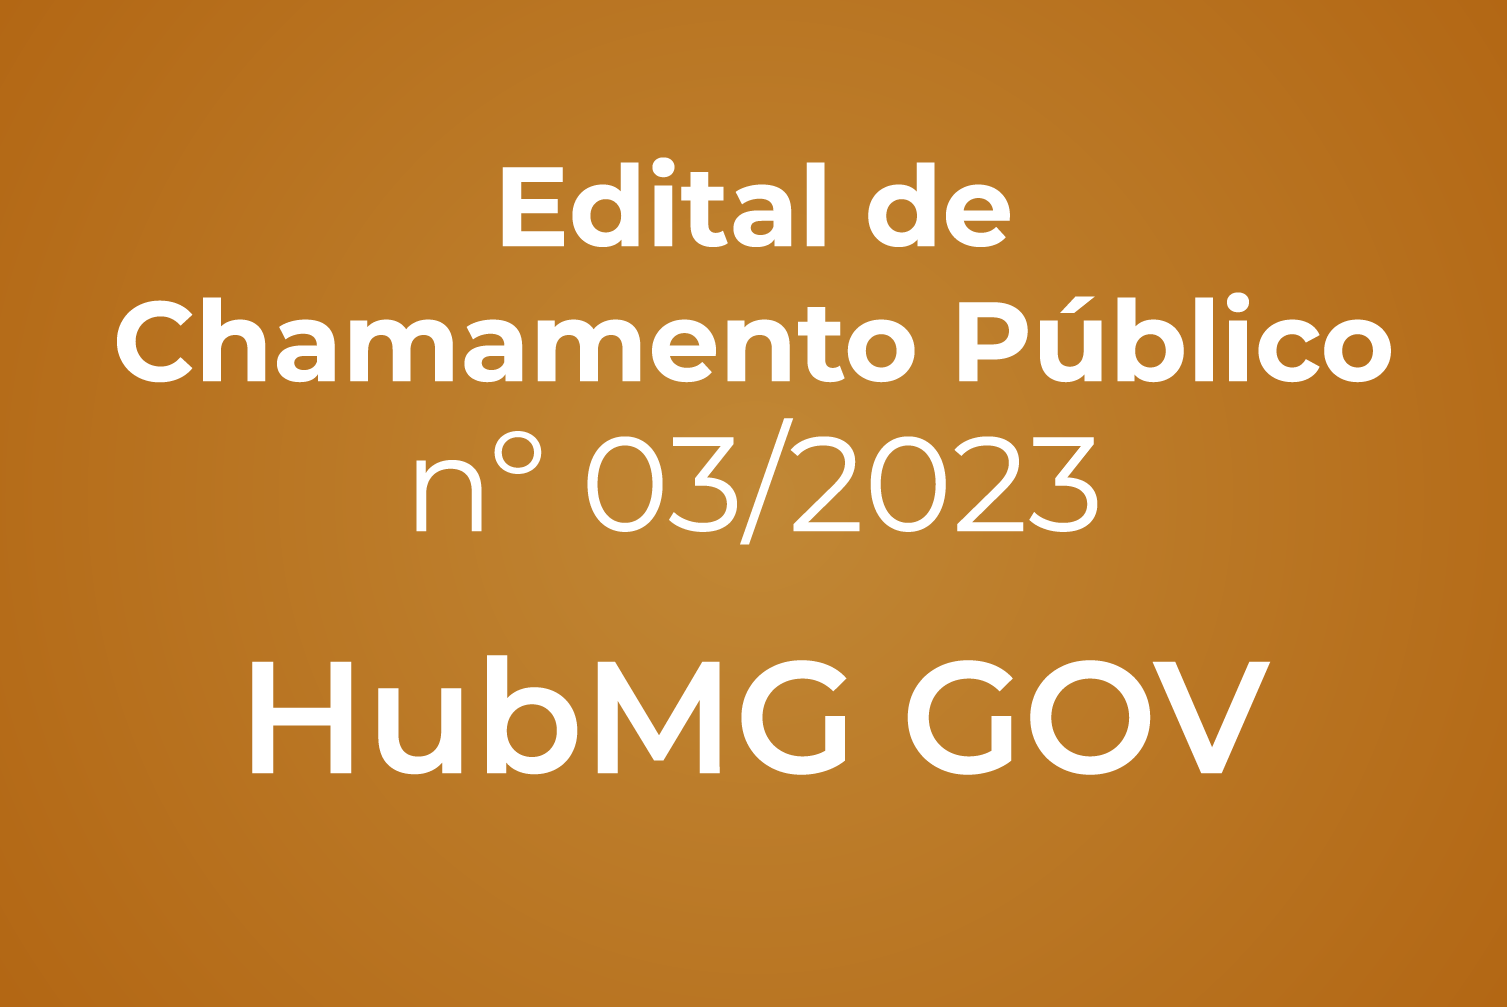 Edital de Chamamento Público nº 03/2023 - HubMG GOV